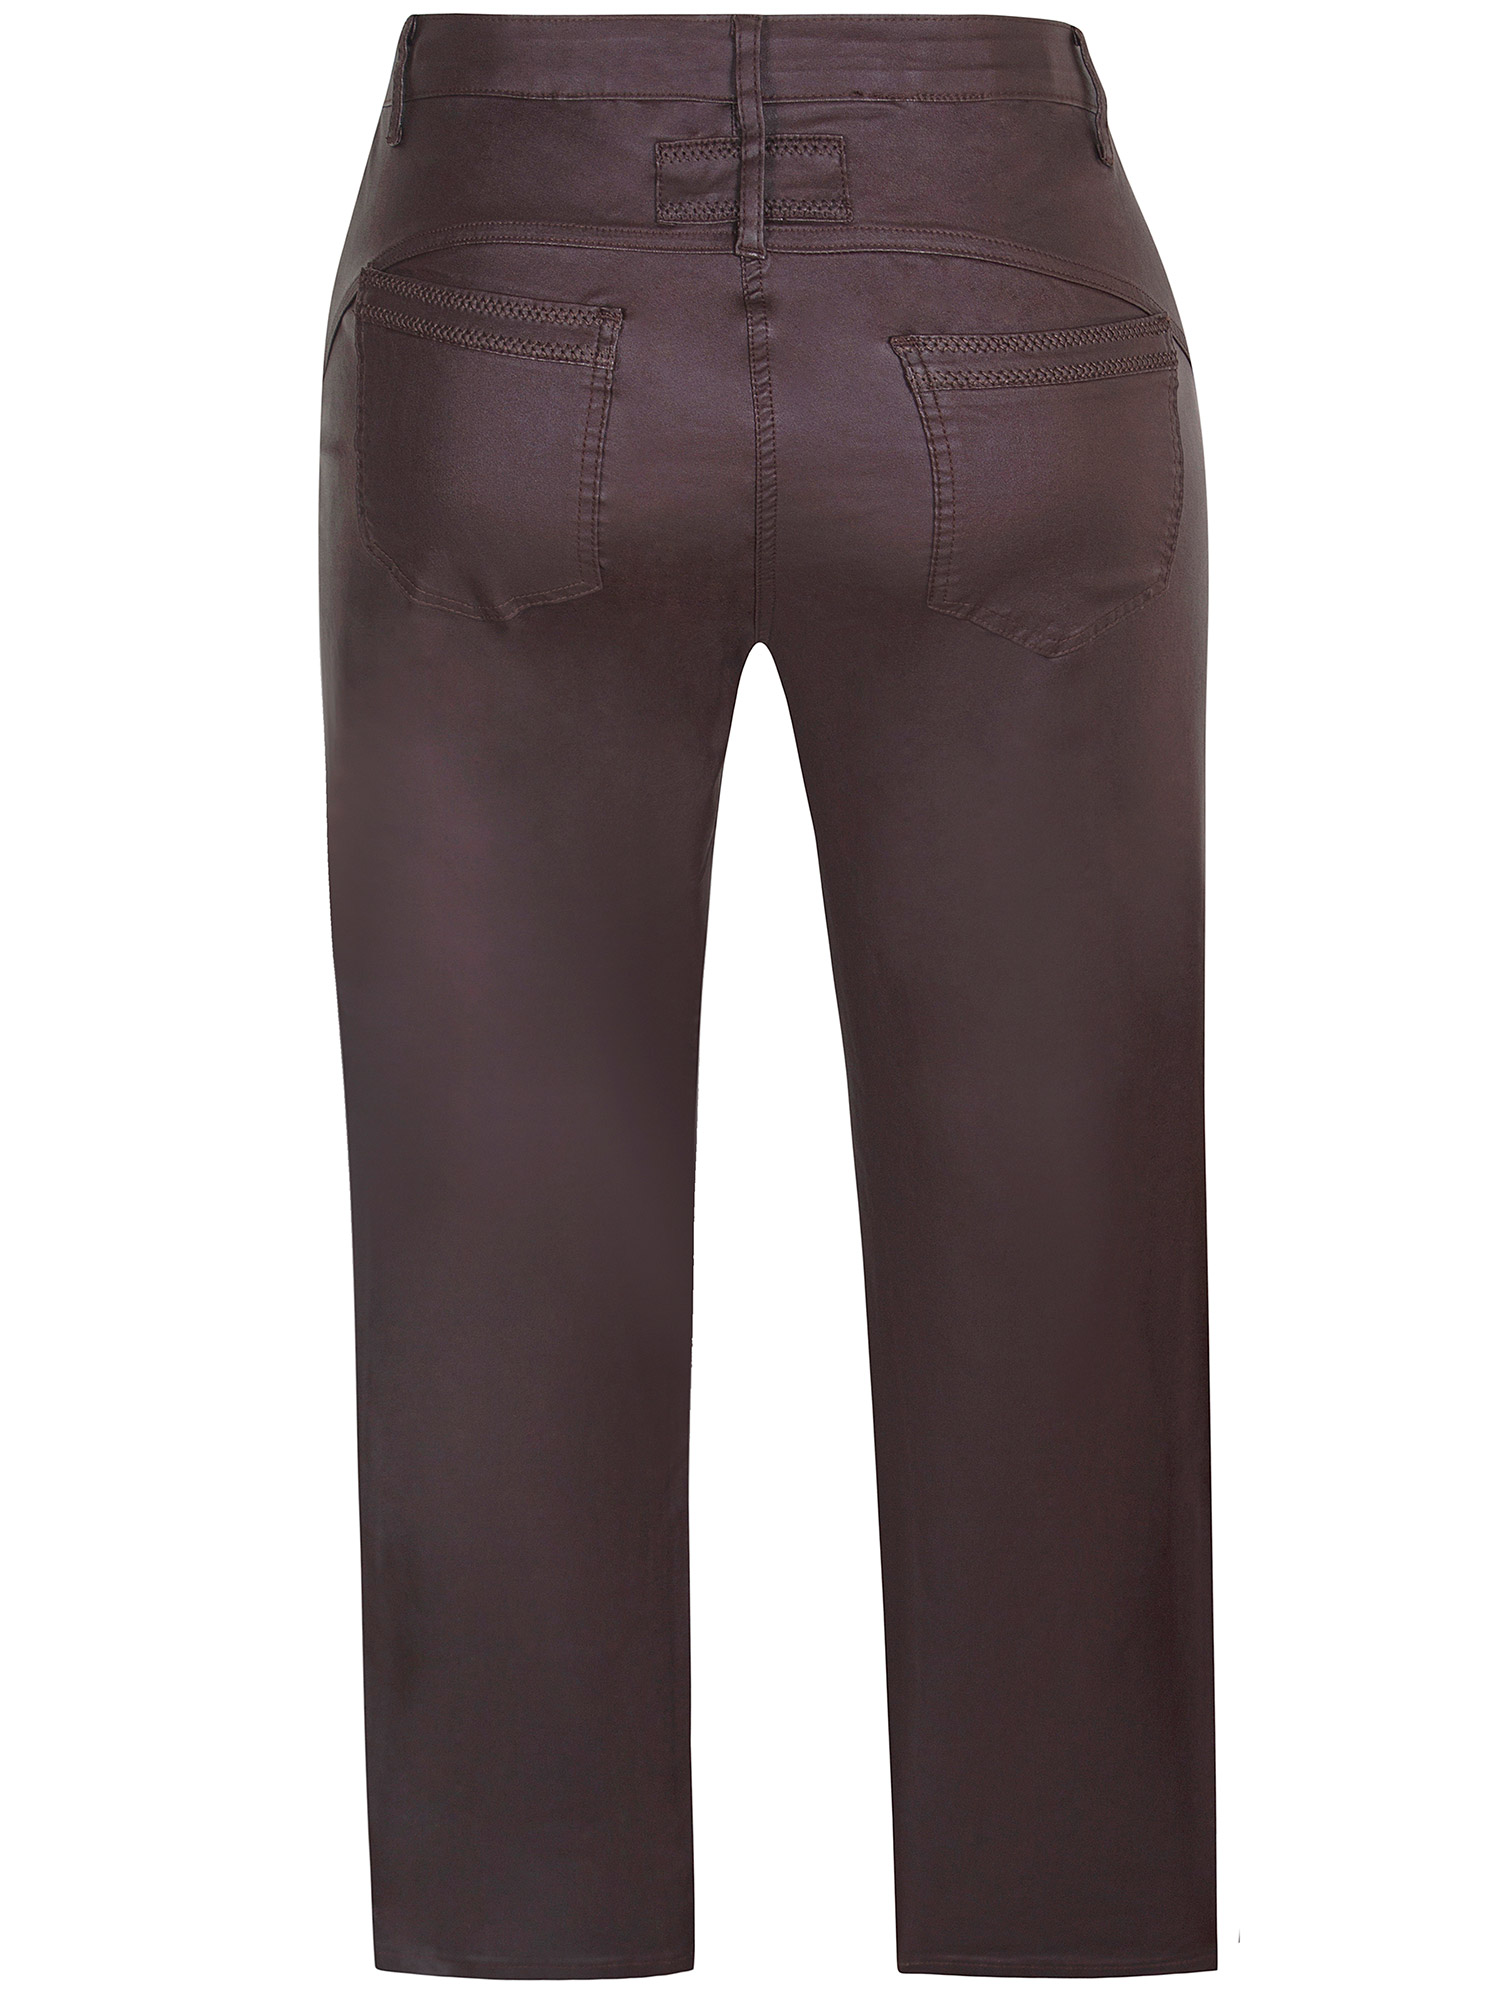 Salsa - Lækre brune strækbar bukser i læder look fra Zhenzi